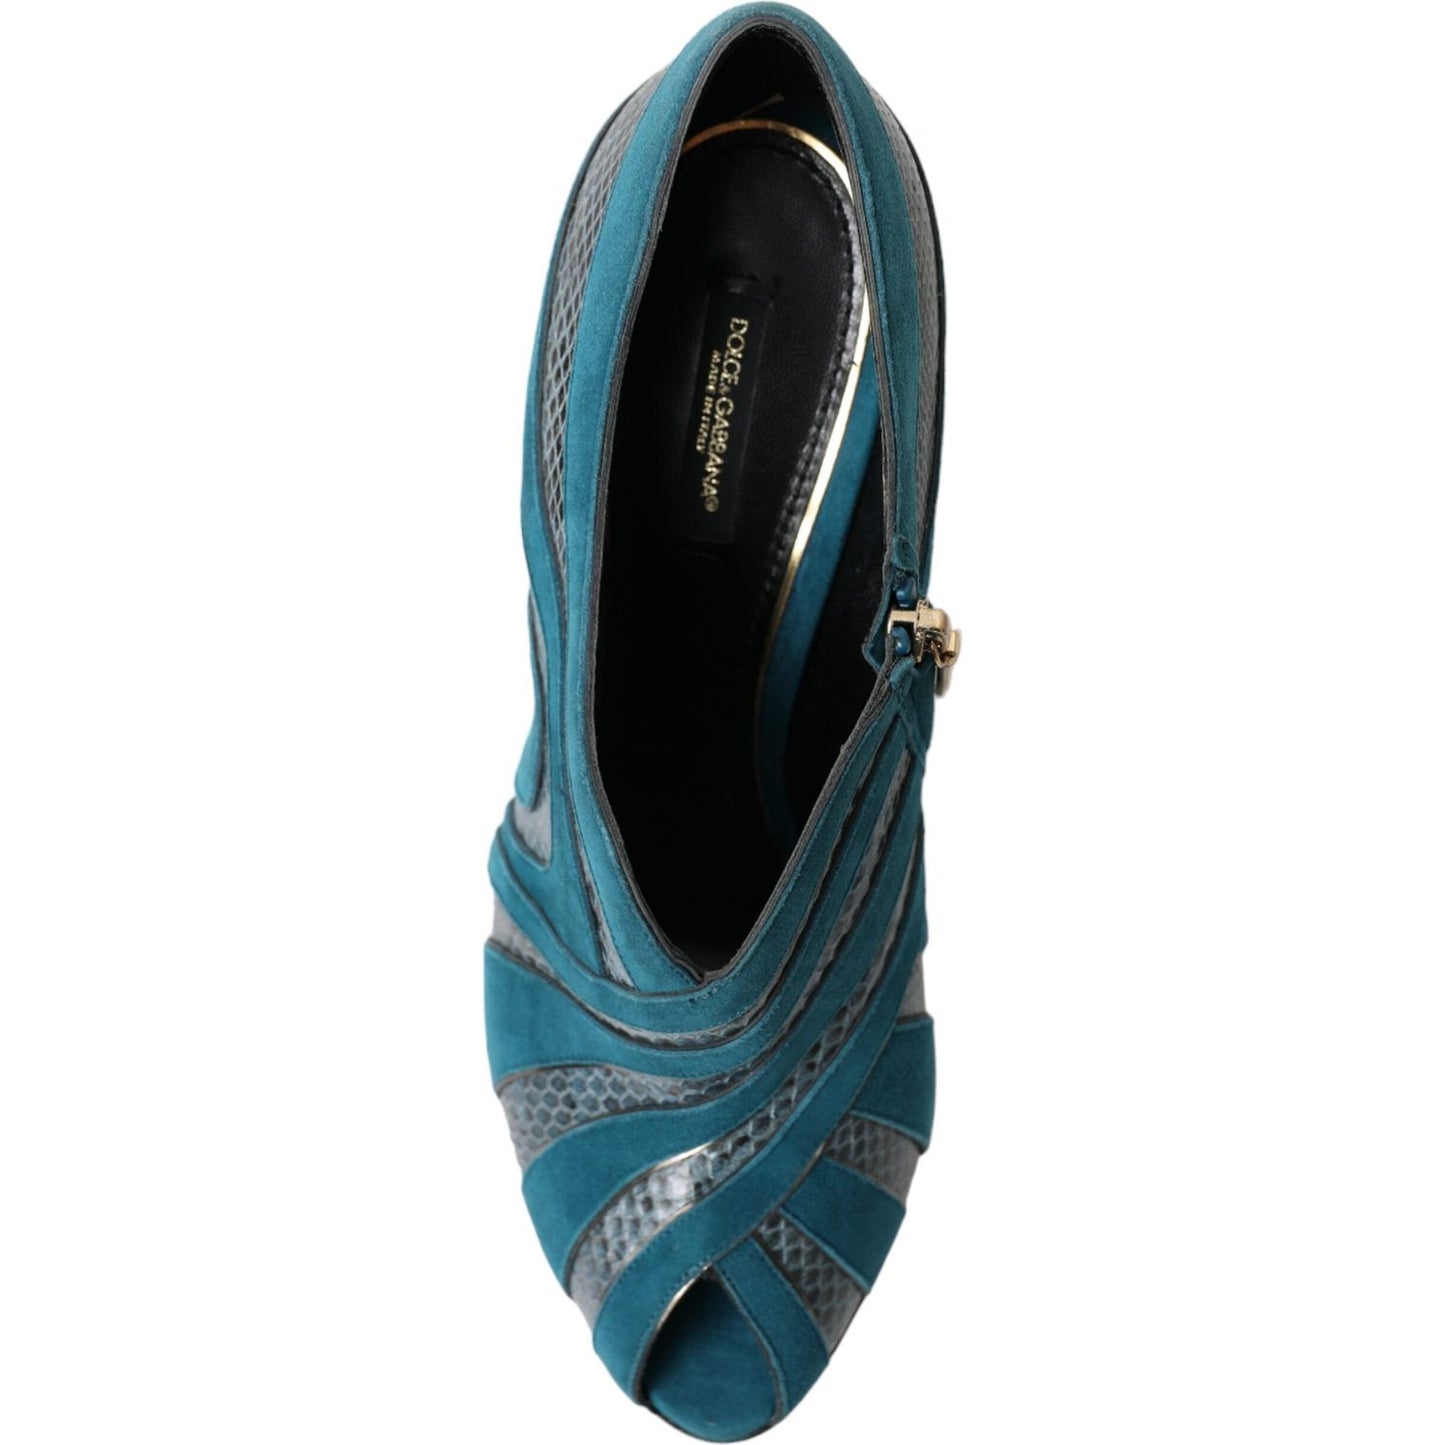 Dolce & Gabbana Teal Suede Peep Toe Heels Pumps teal-suede-leather-peep-toe-heels-pumps-shoes 465A2715-BG-scaled-025eb1e7-533.jpg